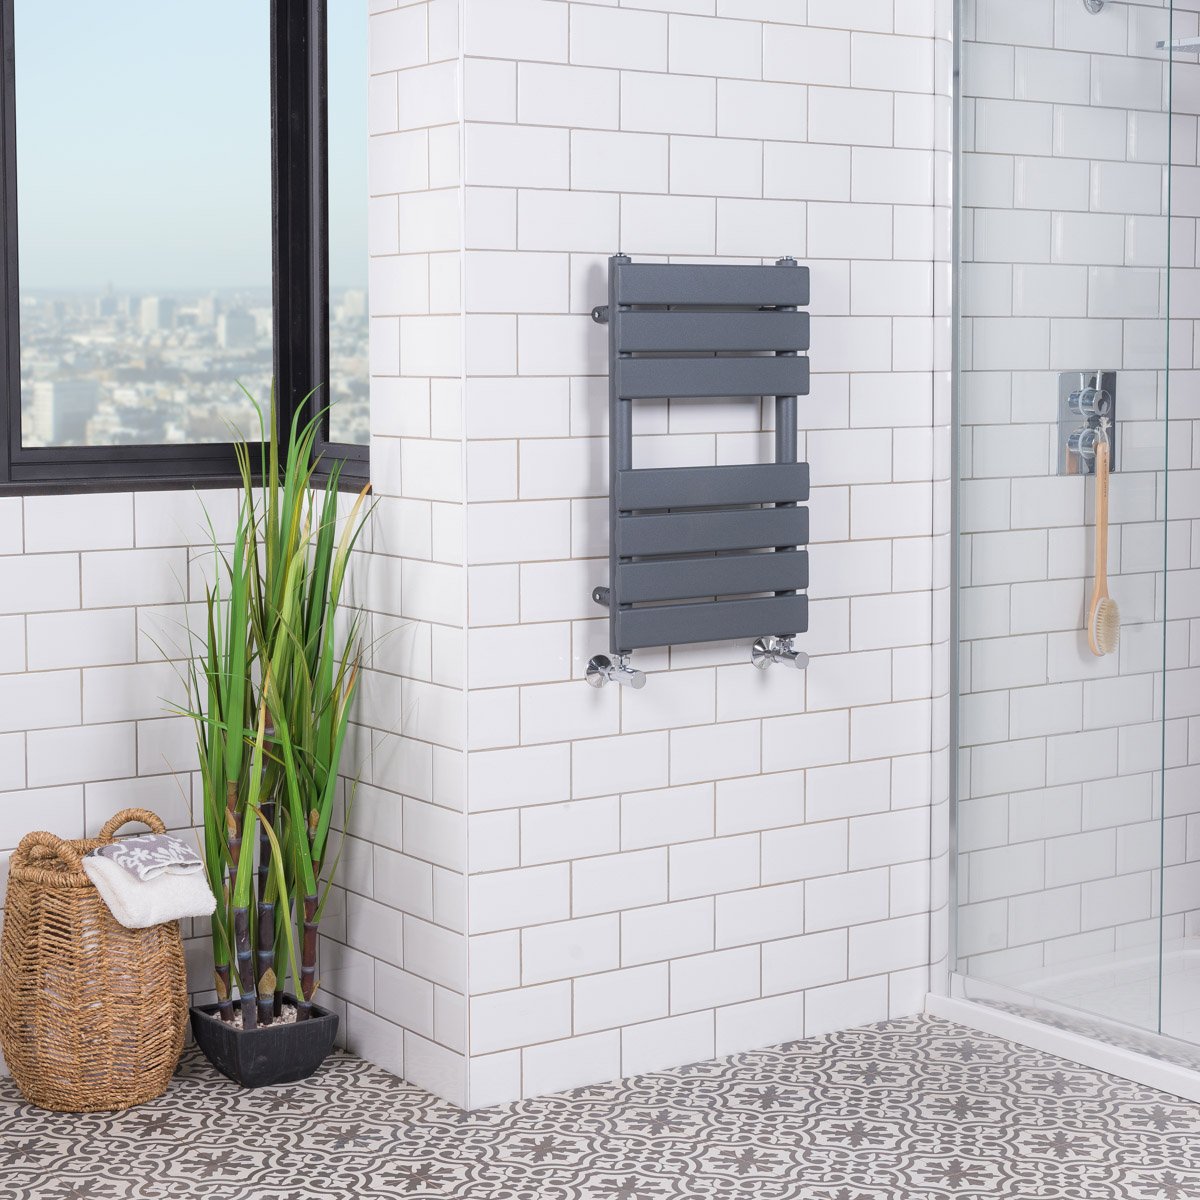 iBathUK 650 x 400 Curved Heated Towel Rail Chrome Bathroom Radiator 